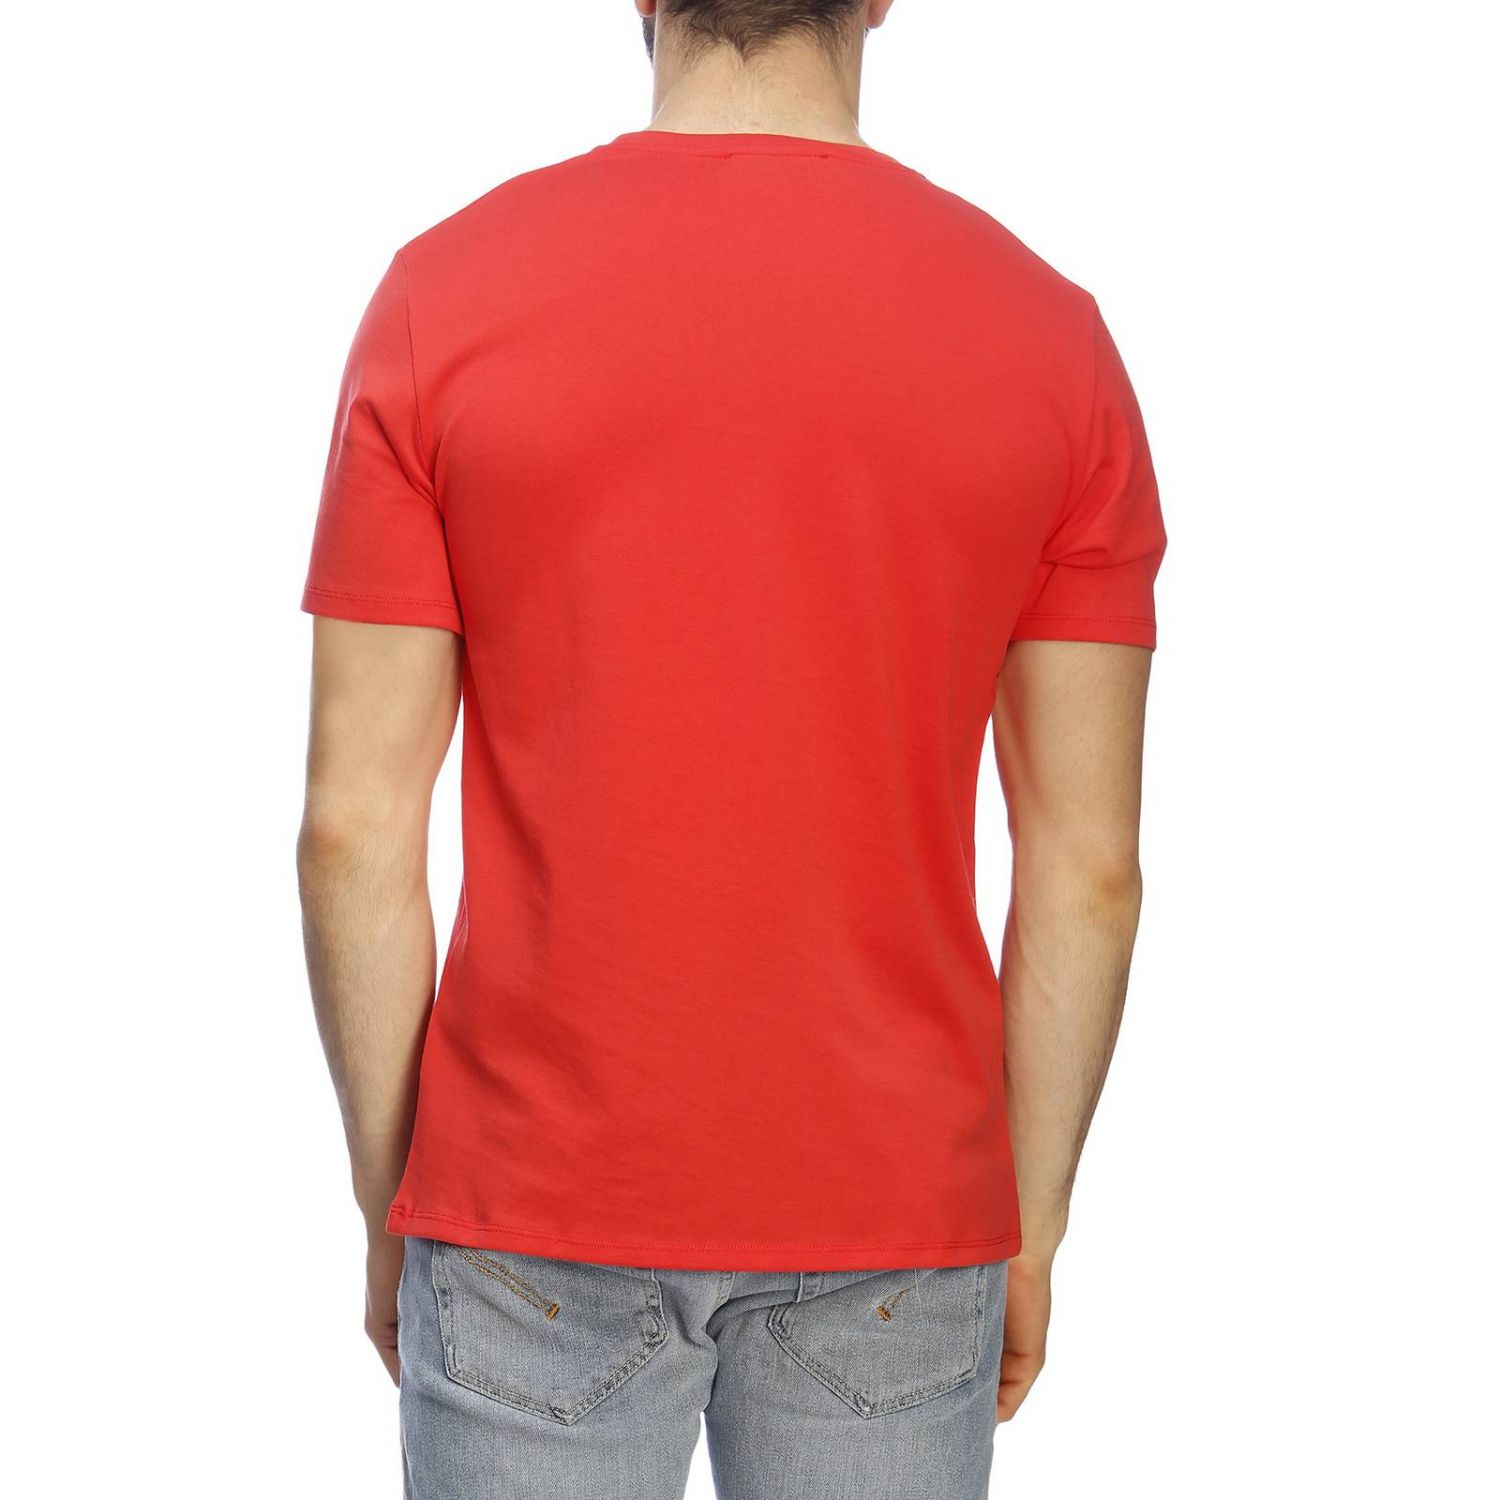 Acne Studios Outlet: T-shirt men - Red | T-Shirt Acne Studios 25U173 ...